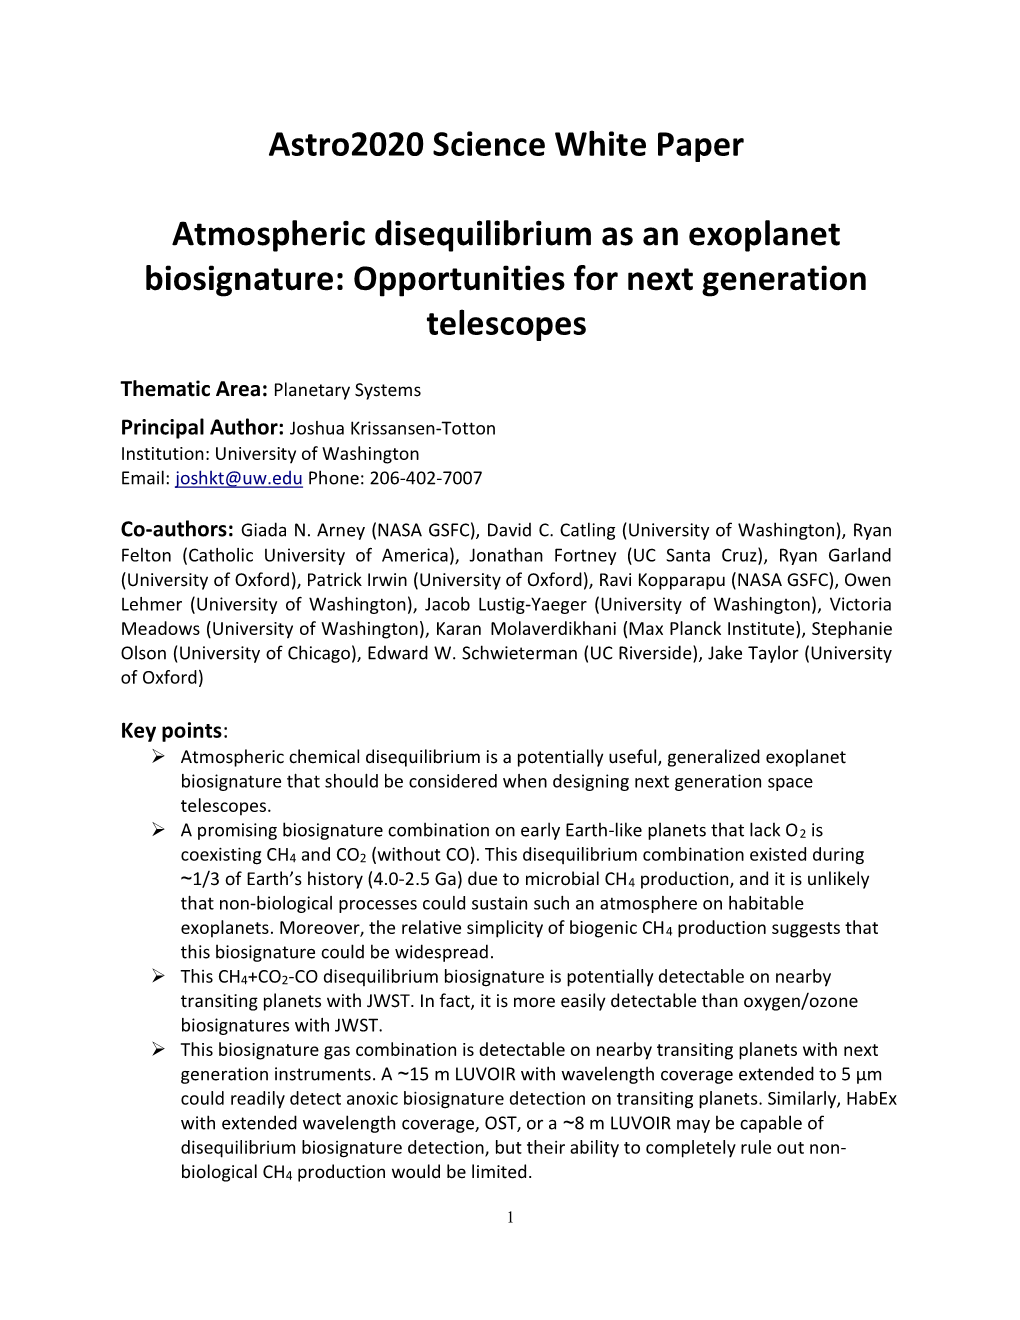 Atmospheric Disequilibrium As an Exoplanet Biosignature: Opportunities for Next Generation Telescopes